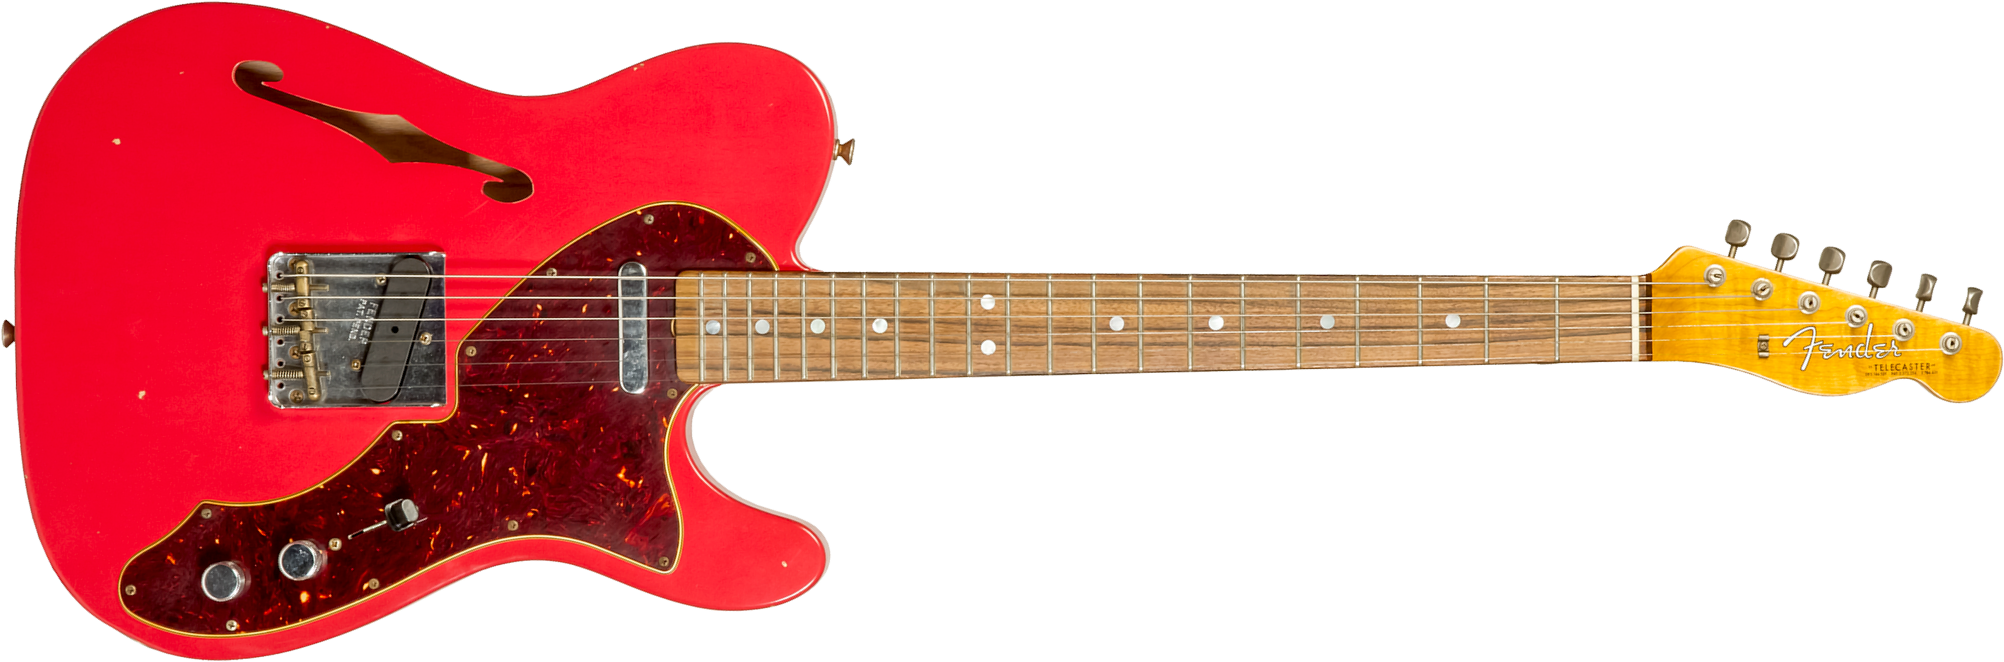 Fender Custom Shop Tele Thinline '60s Ltd 2s Ht Rw #cz544990 - Journeyman Relic Fiesta Red - Semi hollow elektriche gitaar - Main picture